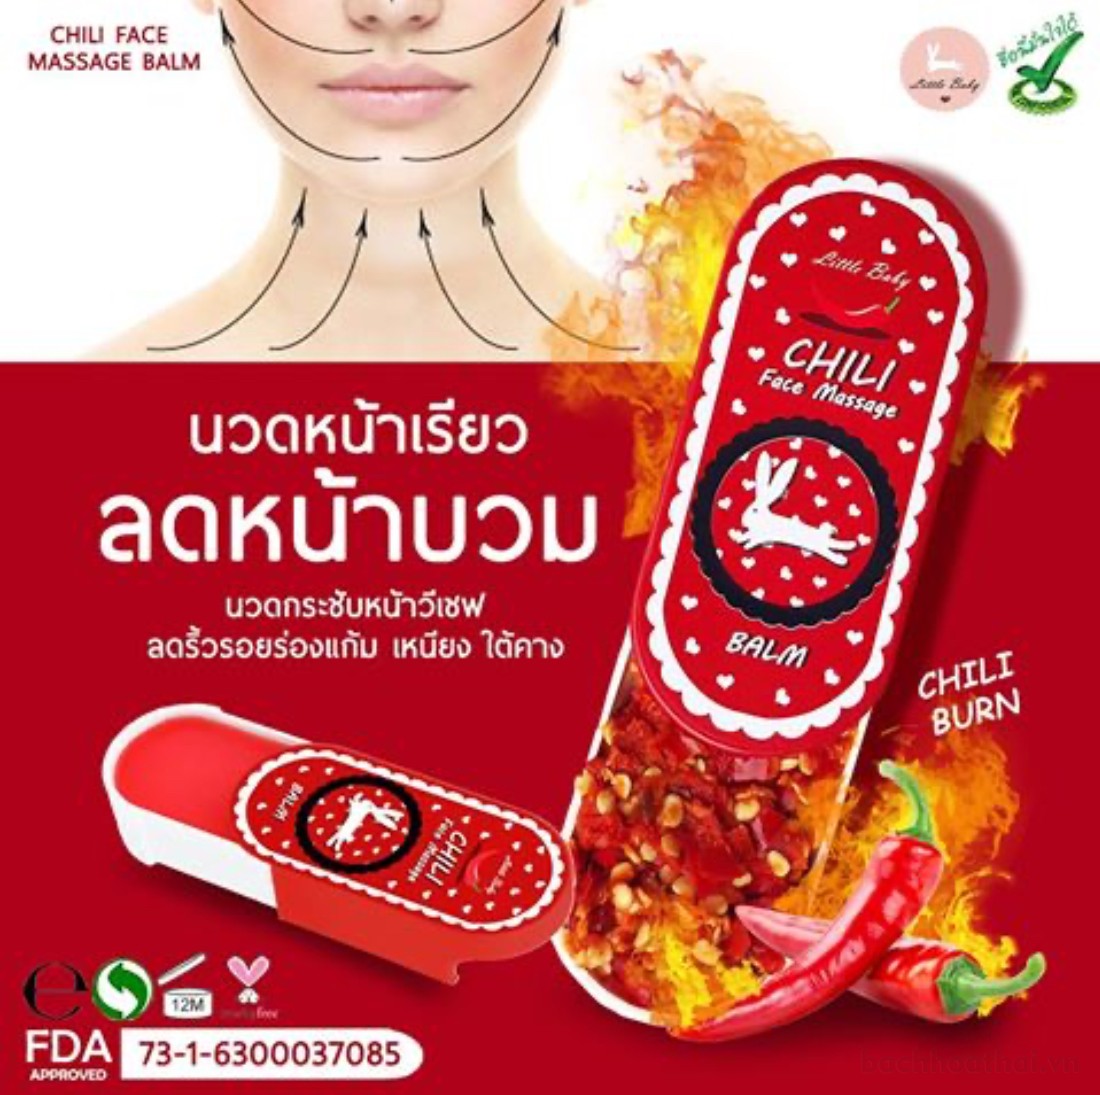 Dầu Massage làm thon cằm Chili Face Massage Balm Thái Lan